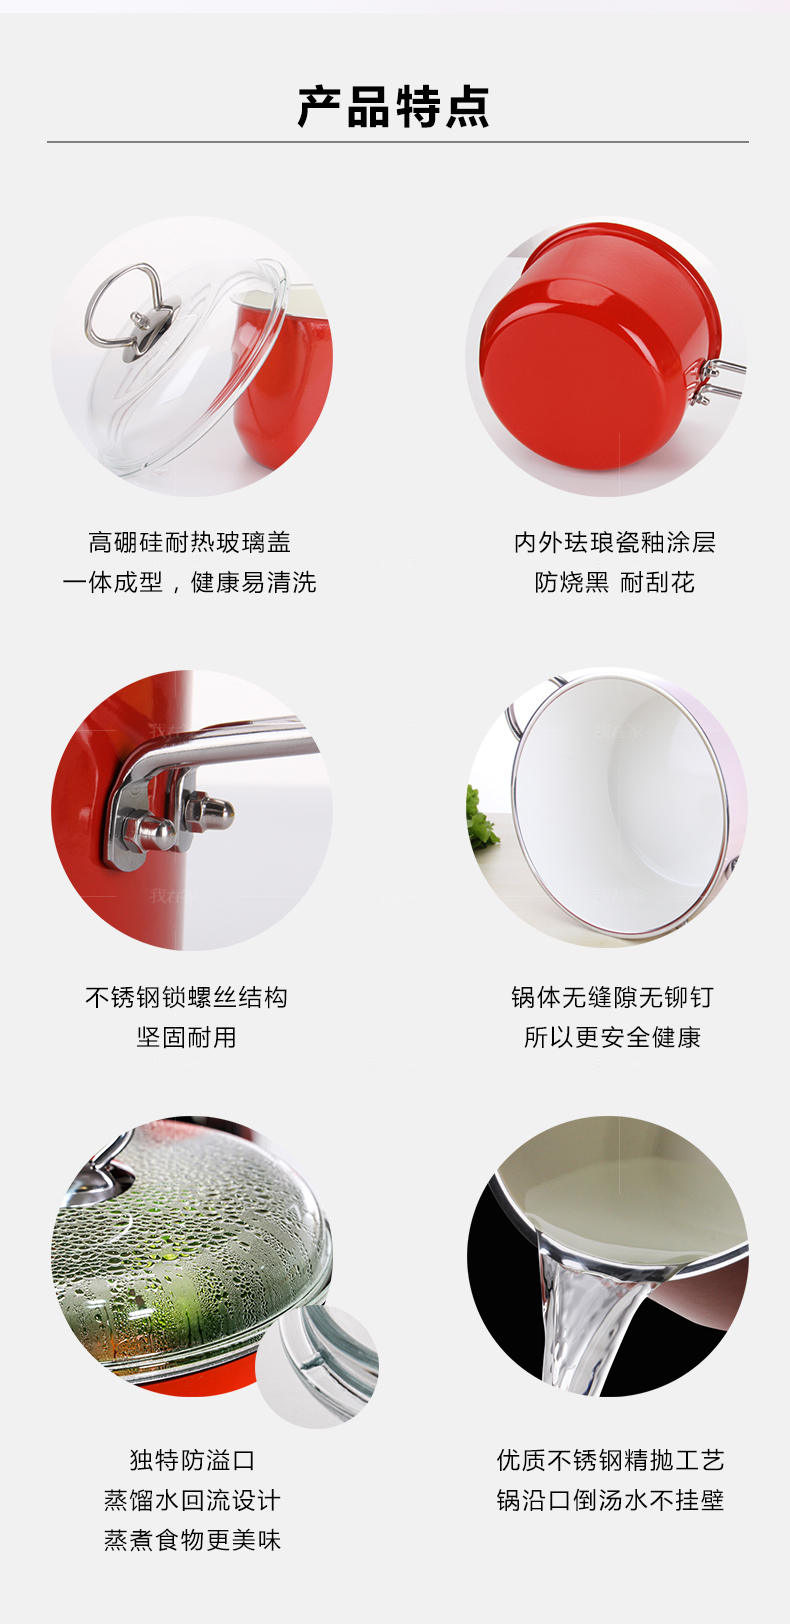 sohome系列珐琅瓷釉不锈钢汤锅的详细介绍